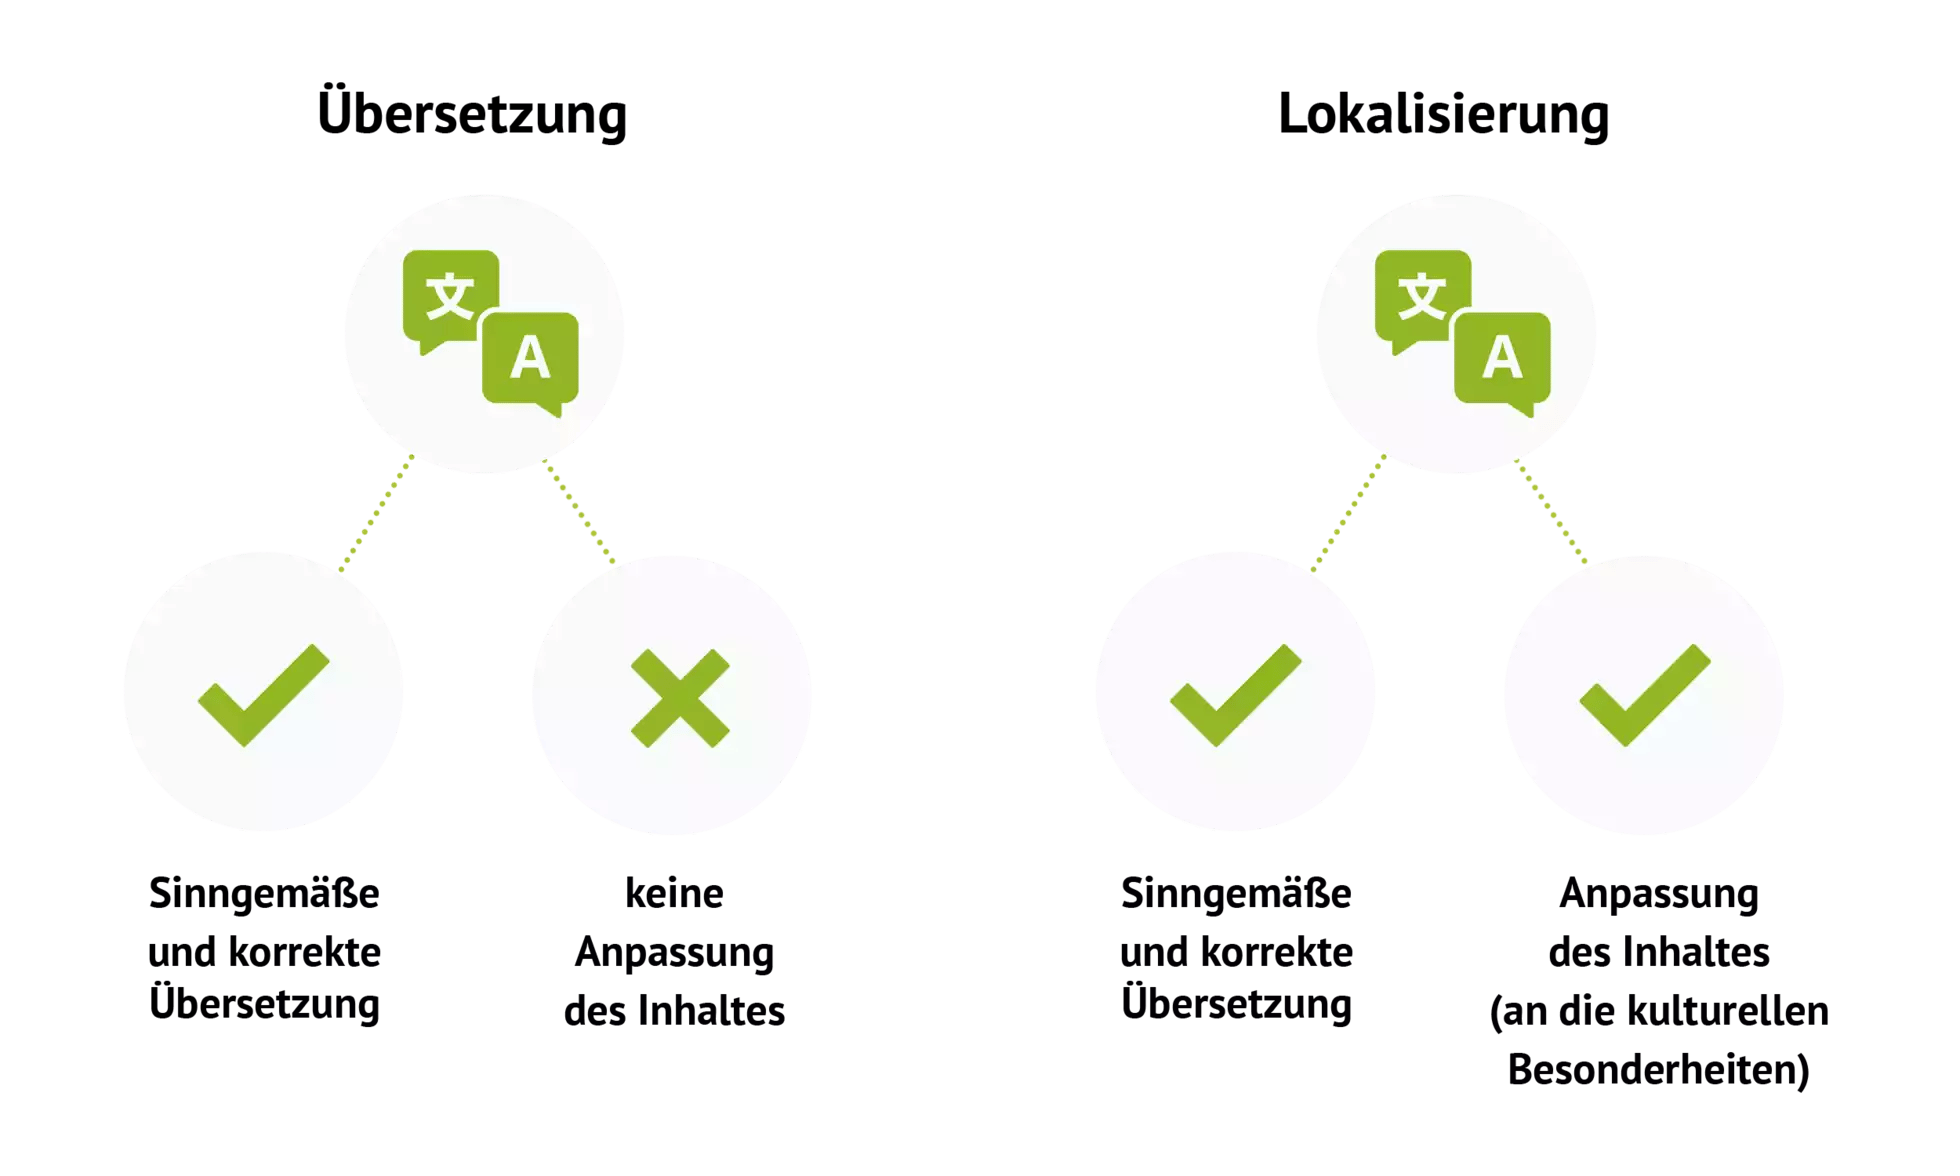 csm_Lokalisierung_vs_Uebersetzung_12fe61e789